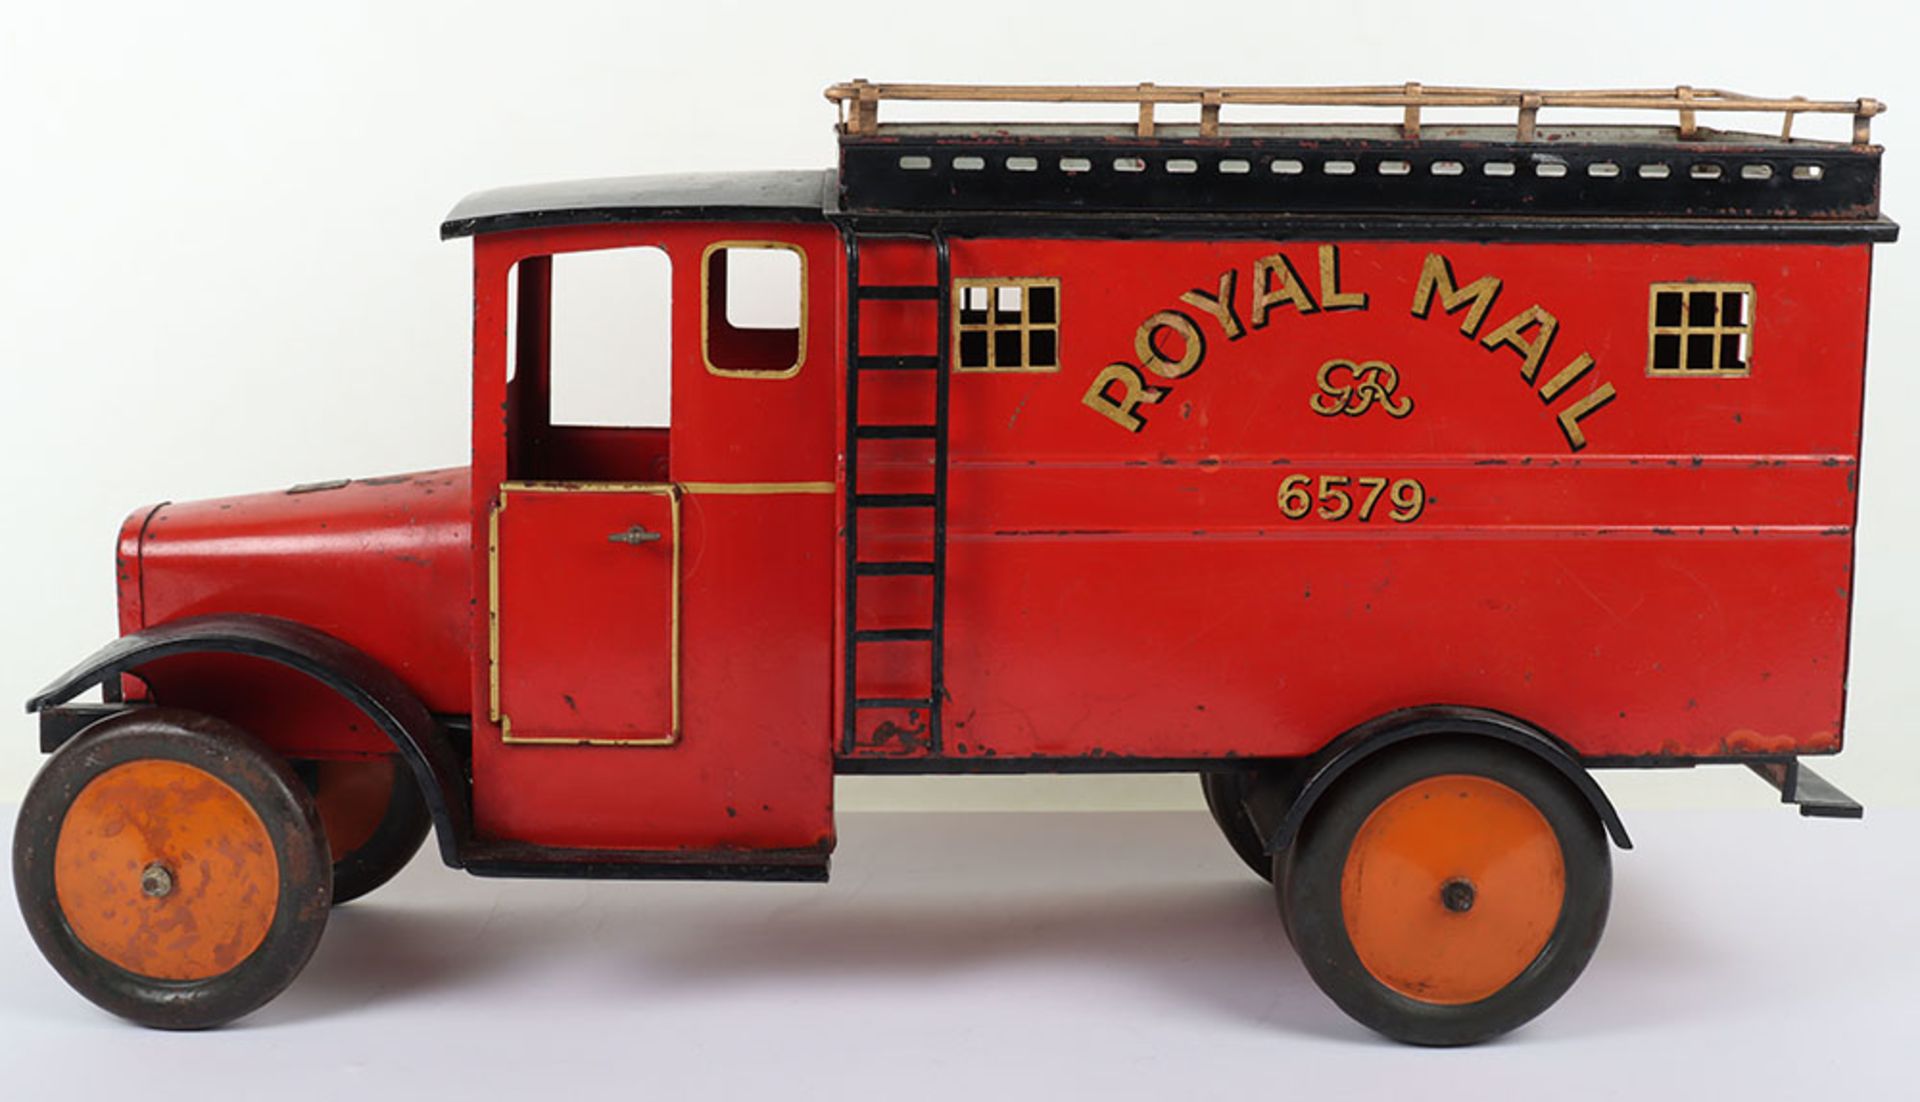 Large and rare Bing pressed steel GR Royal Mail van 6579, German early 1920s - Image 3 of 8